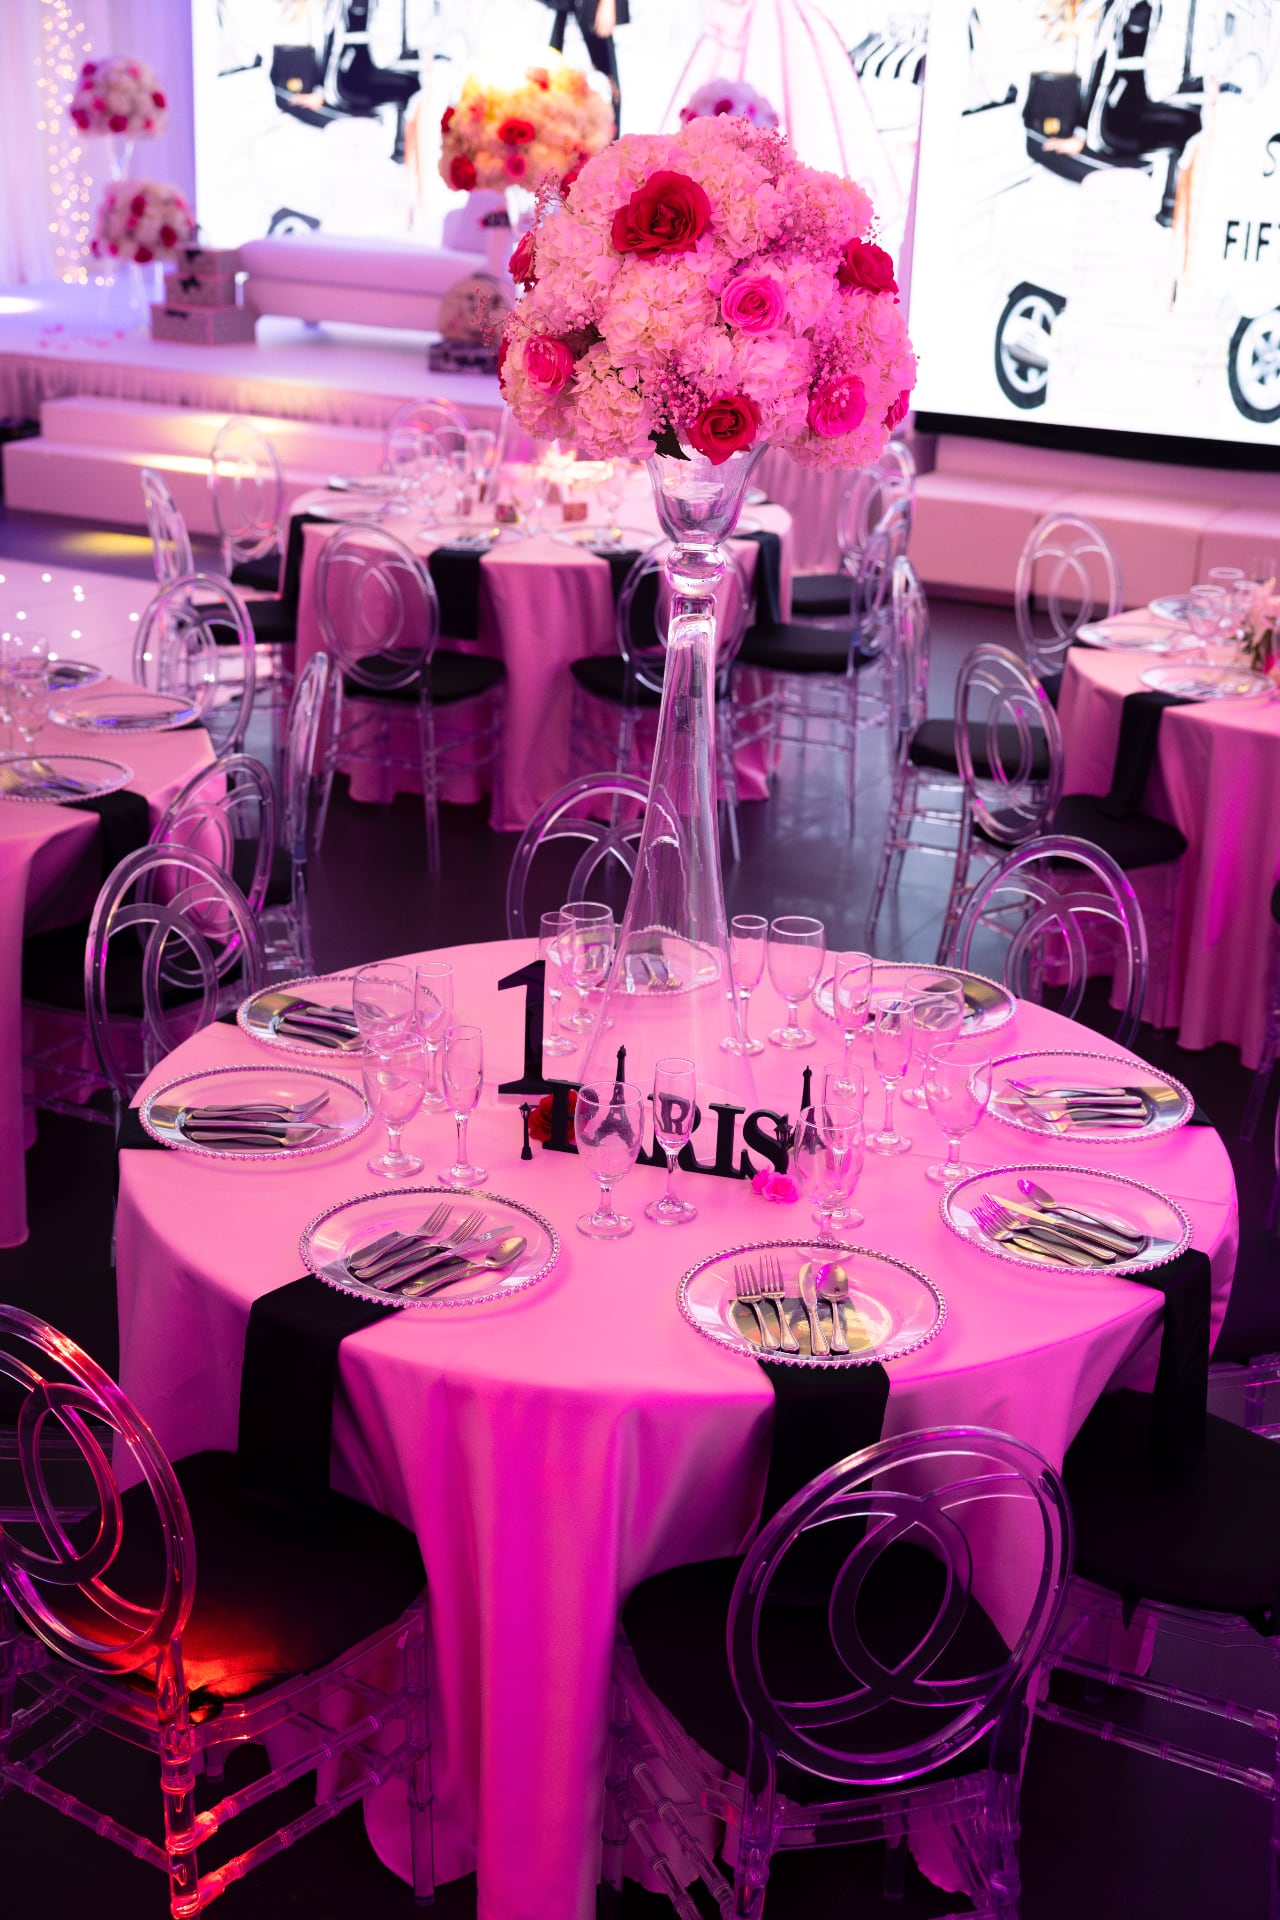 Sweet Fifteens Paris - Onyx Luxury Banquet Hall